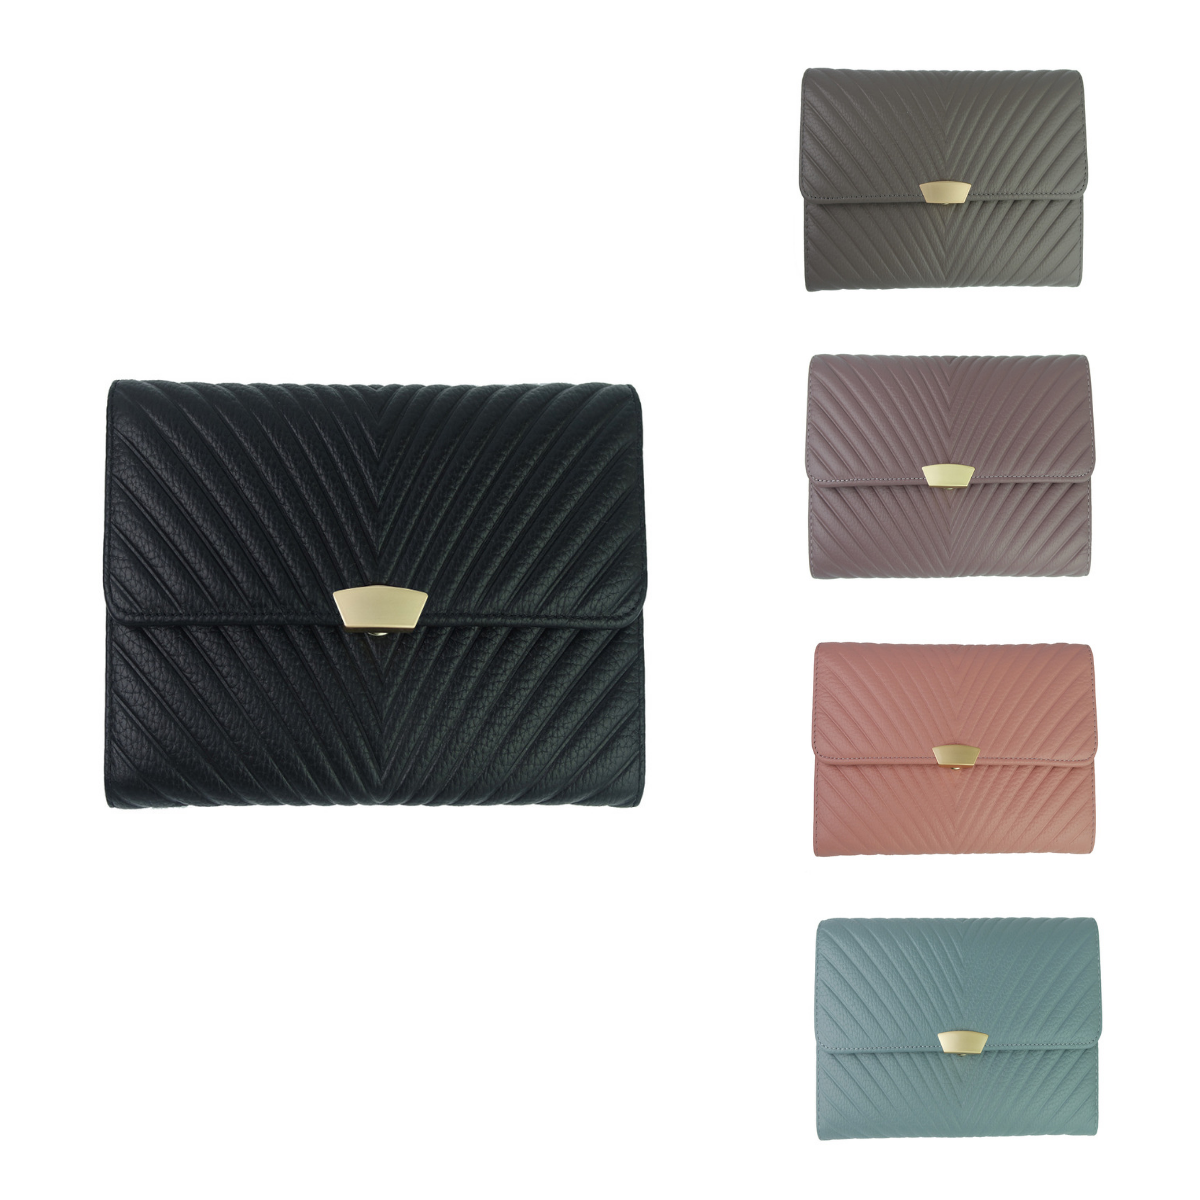 Women's cowhide leather short wallet/purse Chevron design by Tomorrow Closet